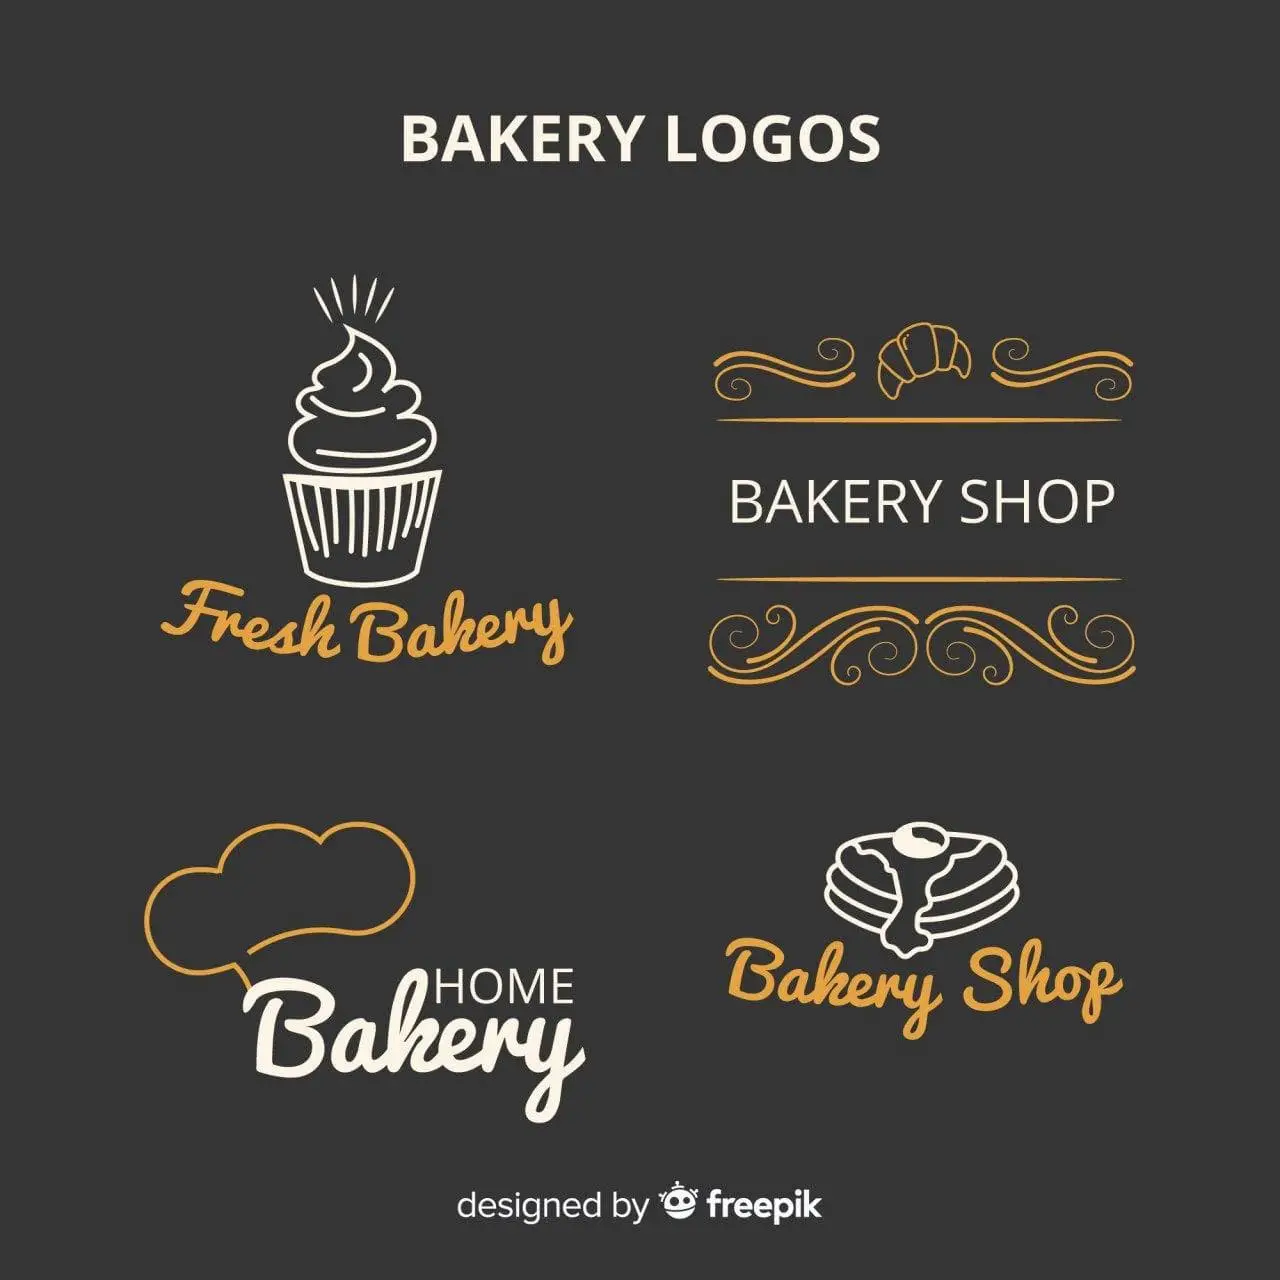 Bakery Logos in Line Art